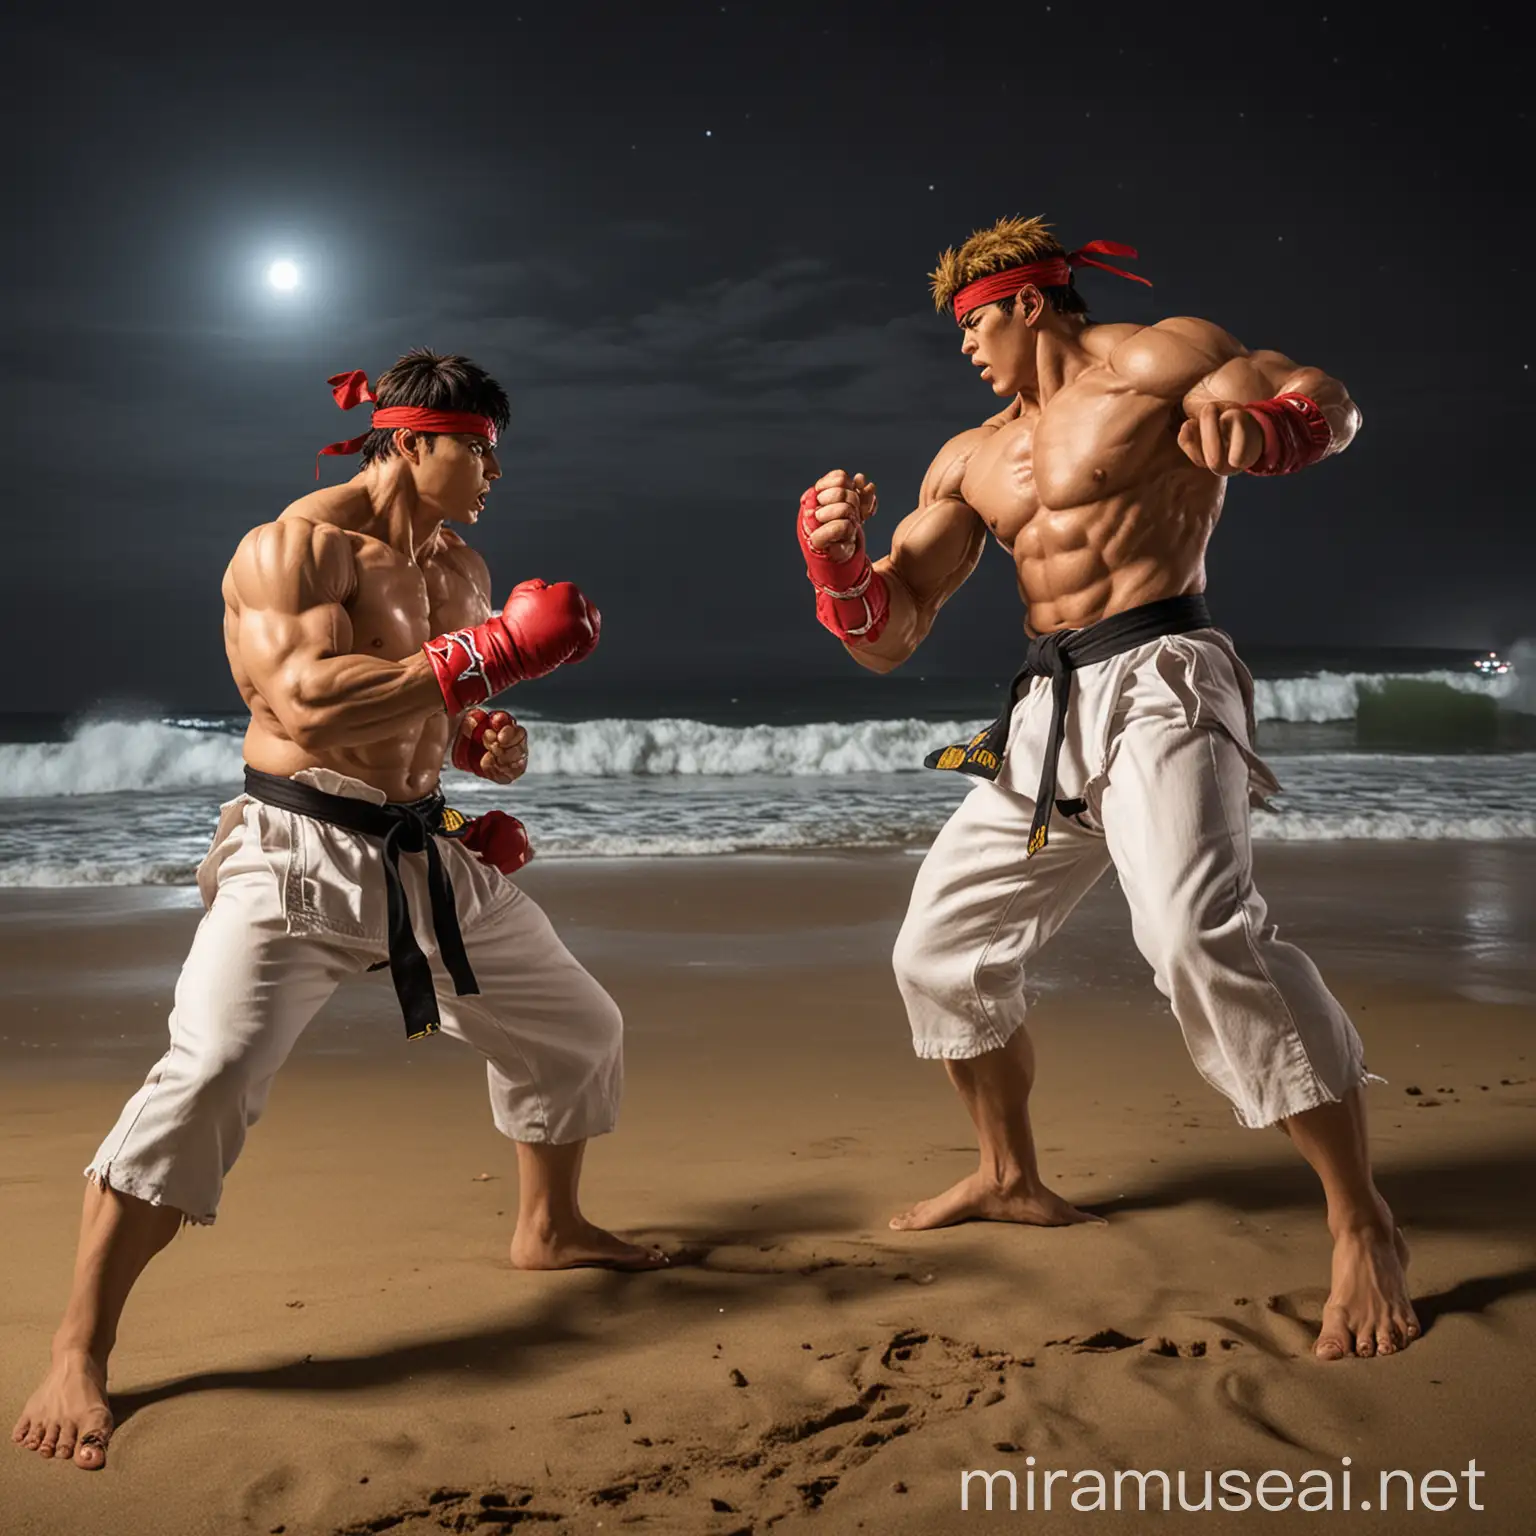 Night Beach Battle Ken and Ryu Street Fighter Duel in Brazil